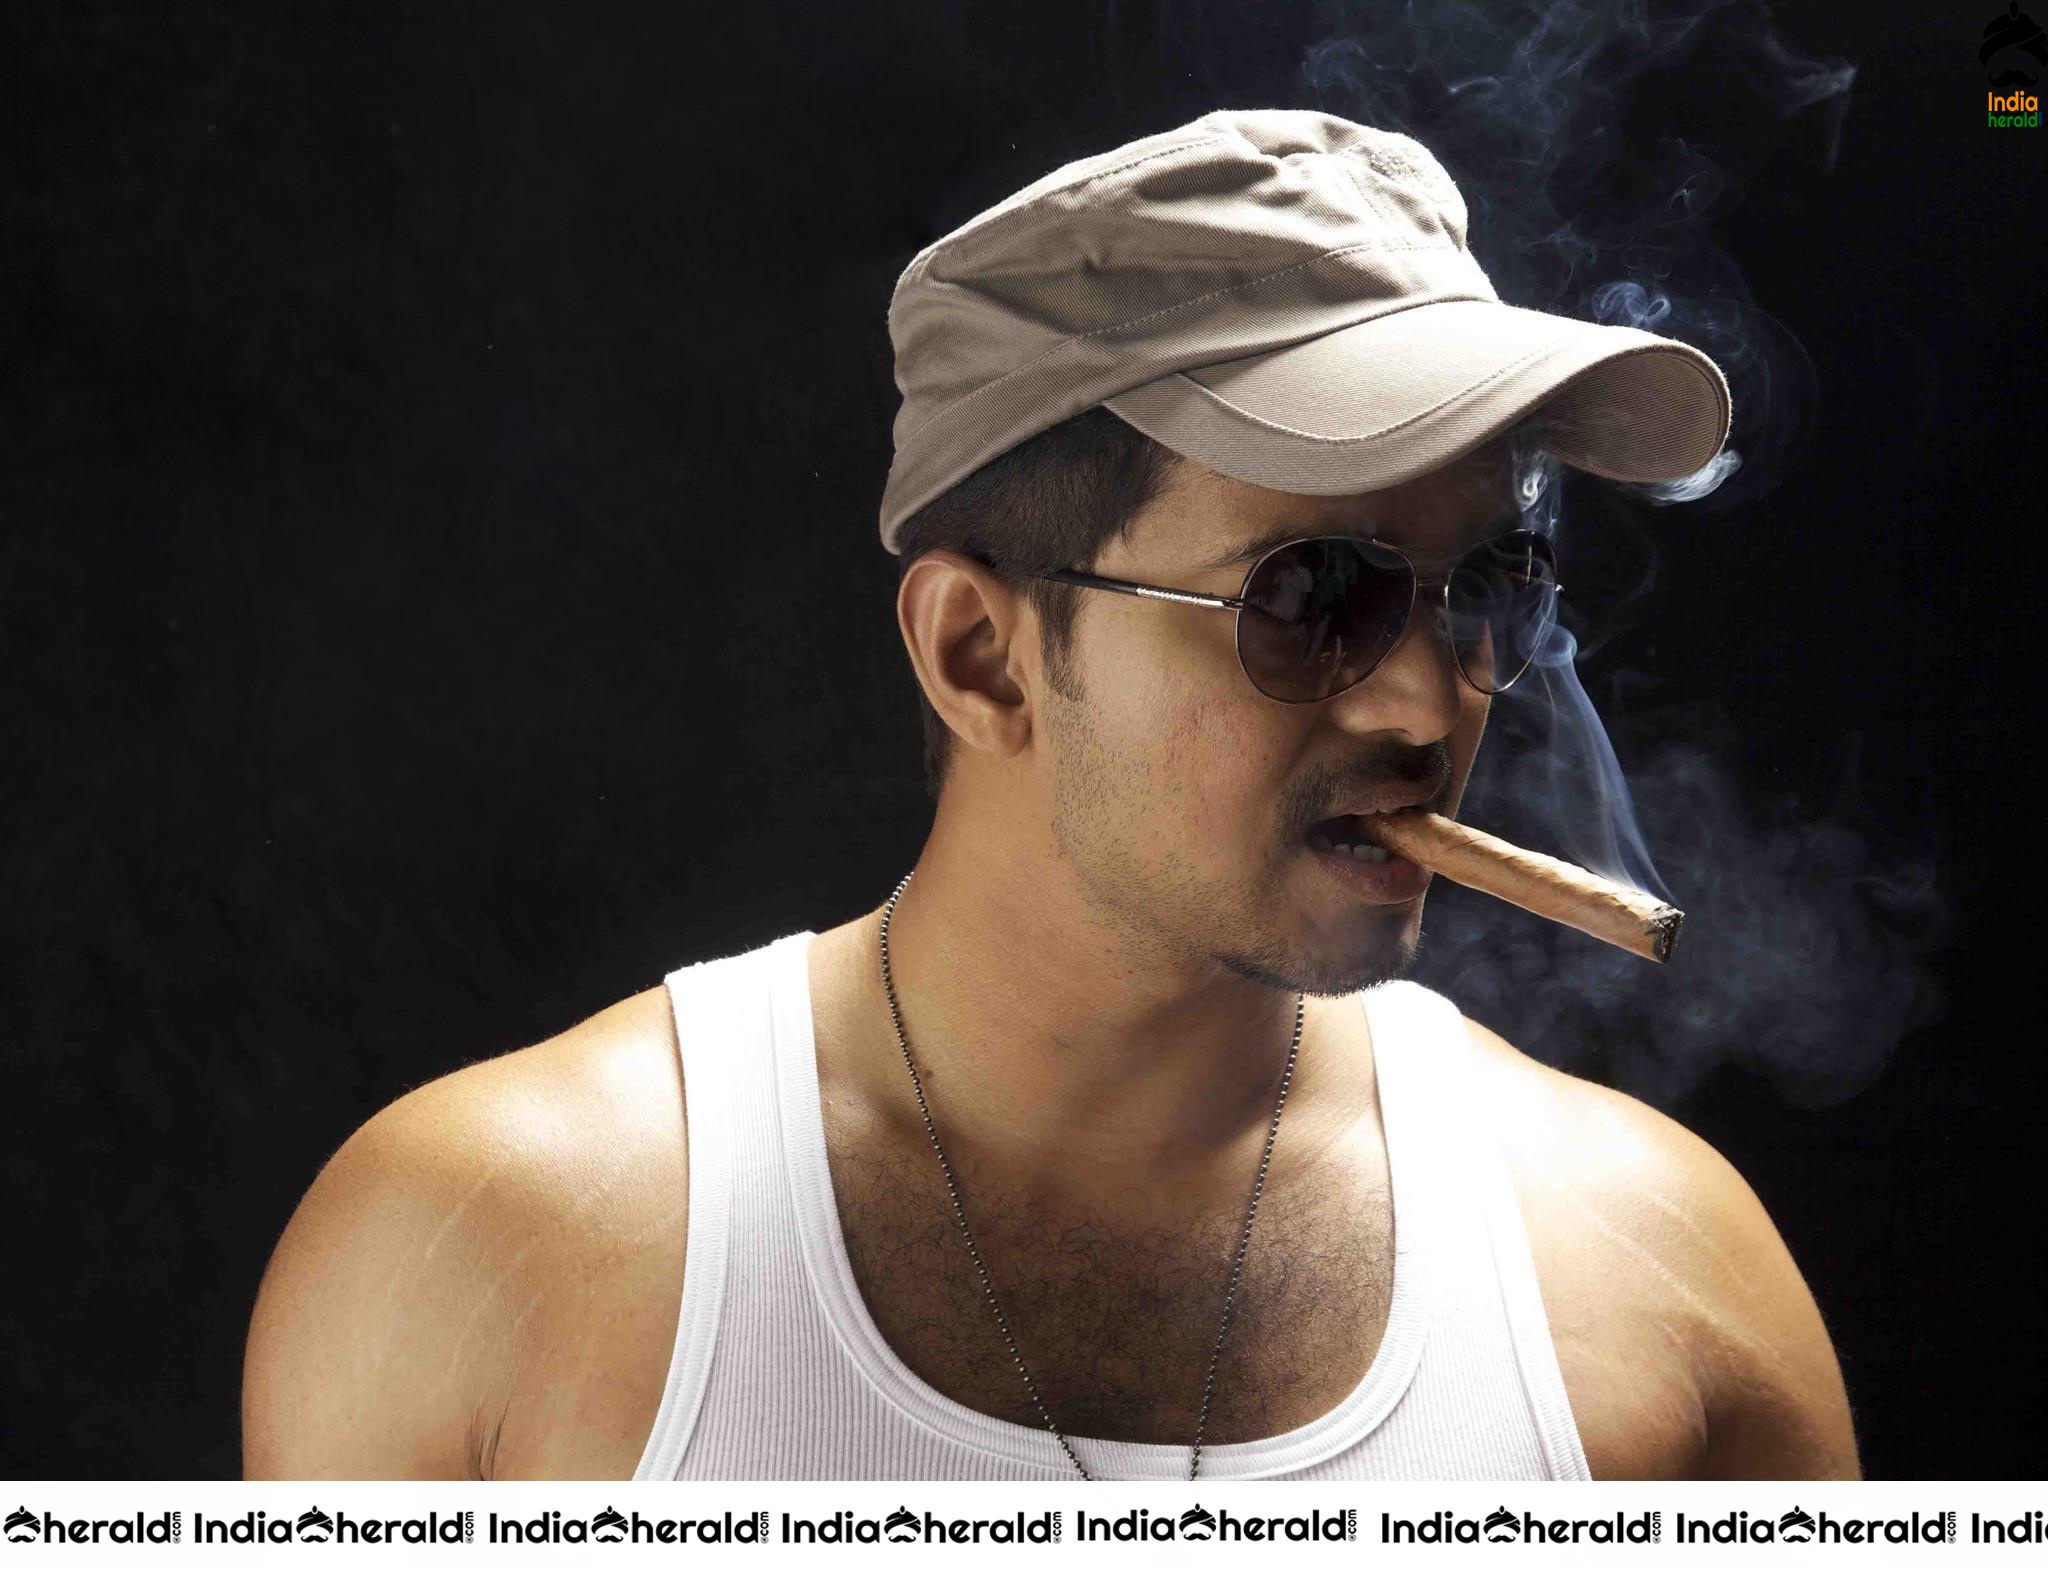 INDIA HERALD EXCLUSIVE Actor Vijay Unseen Photos Collection Set 1